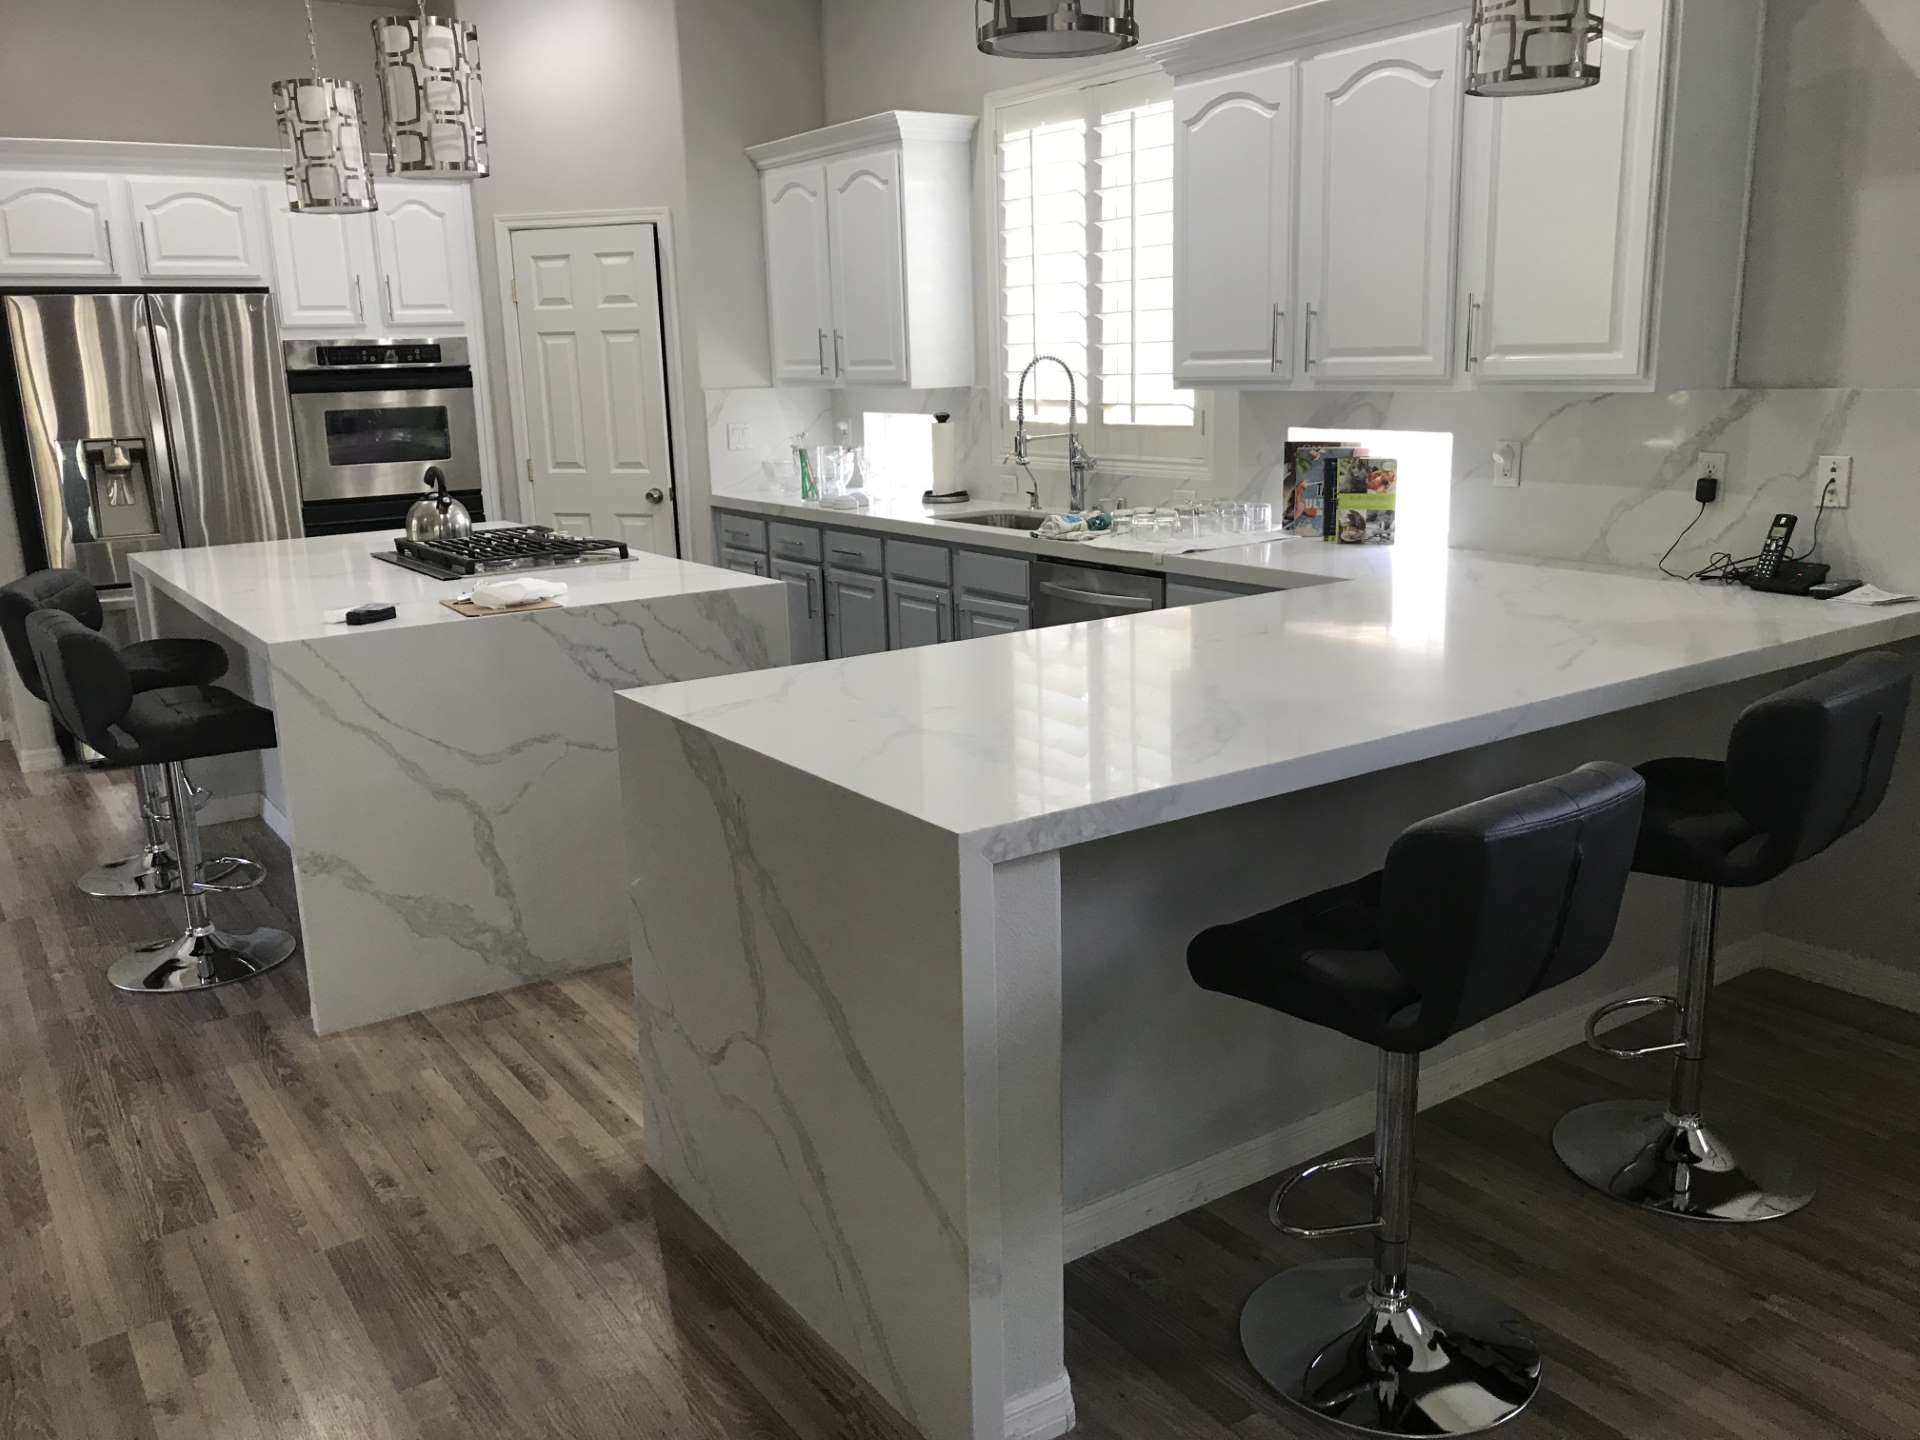 kitchen renovation for under $10,000 in las vegas